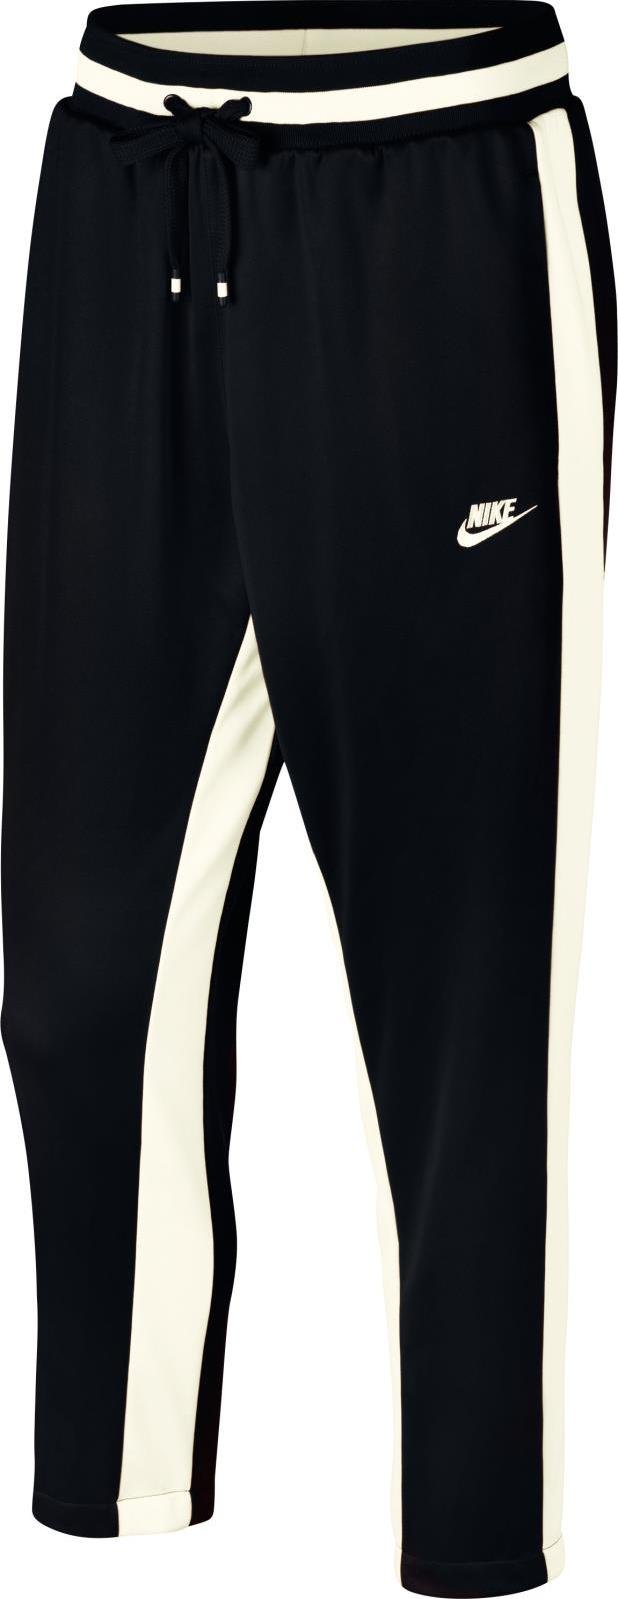 Pants Nike M NSW AIR PANT PK - Top4Football.com